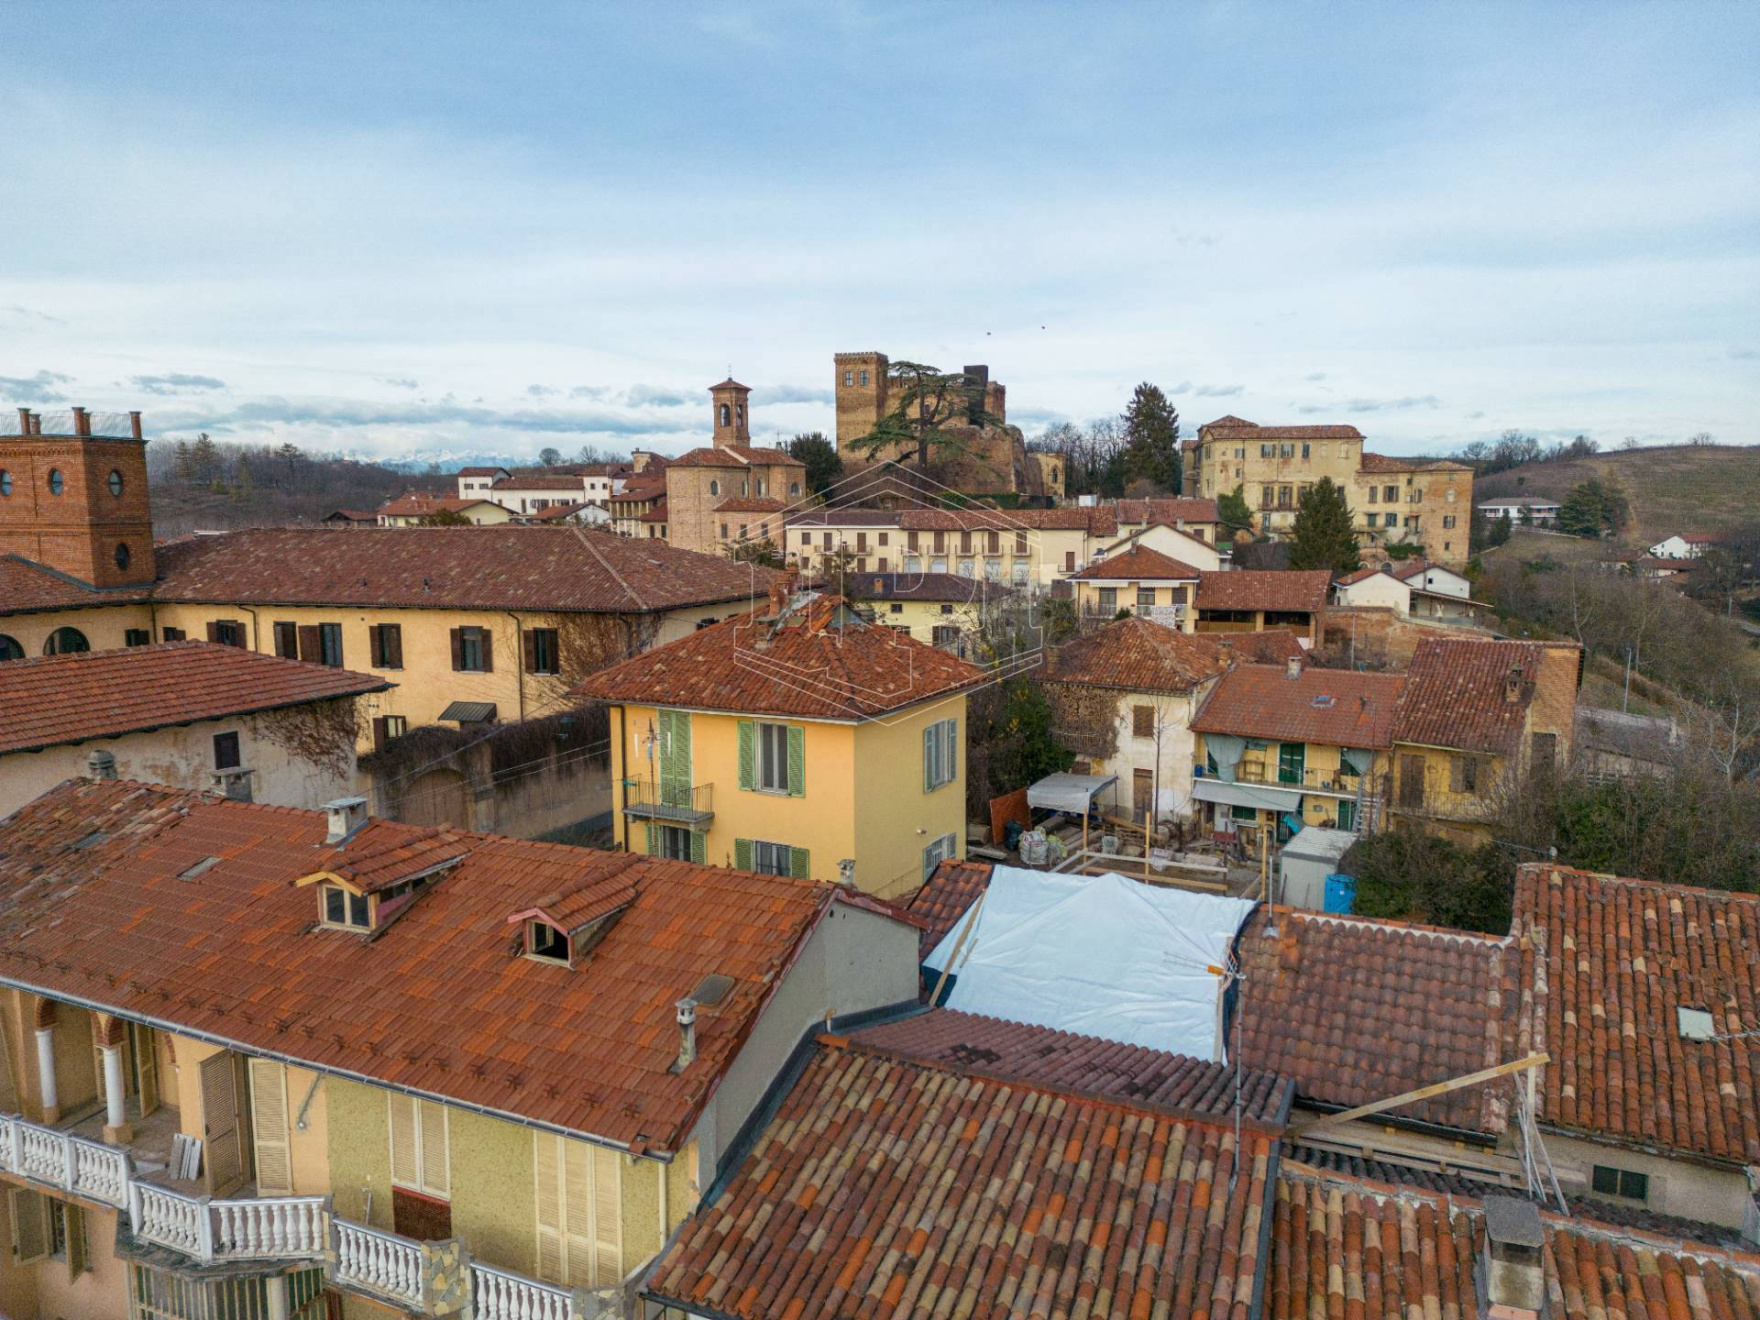 Casa semindipendente in Via Robiola, Arignano (TO)